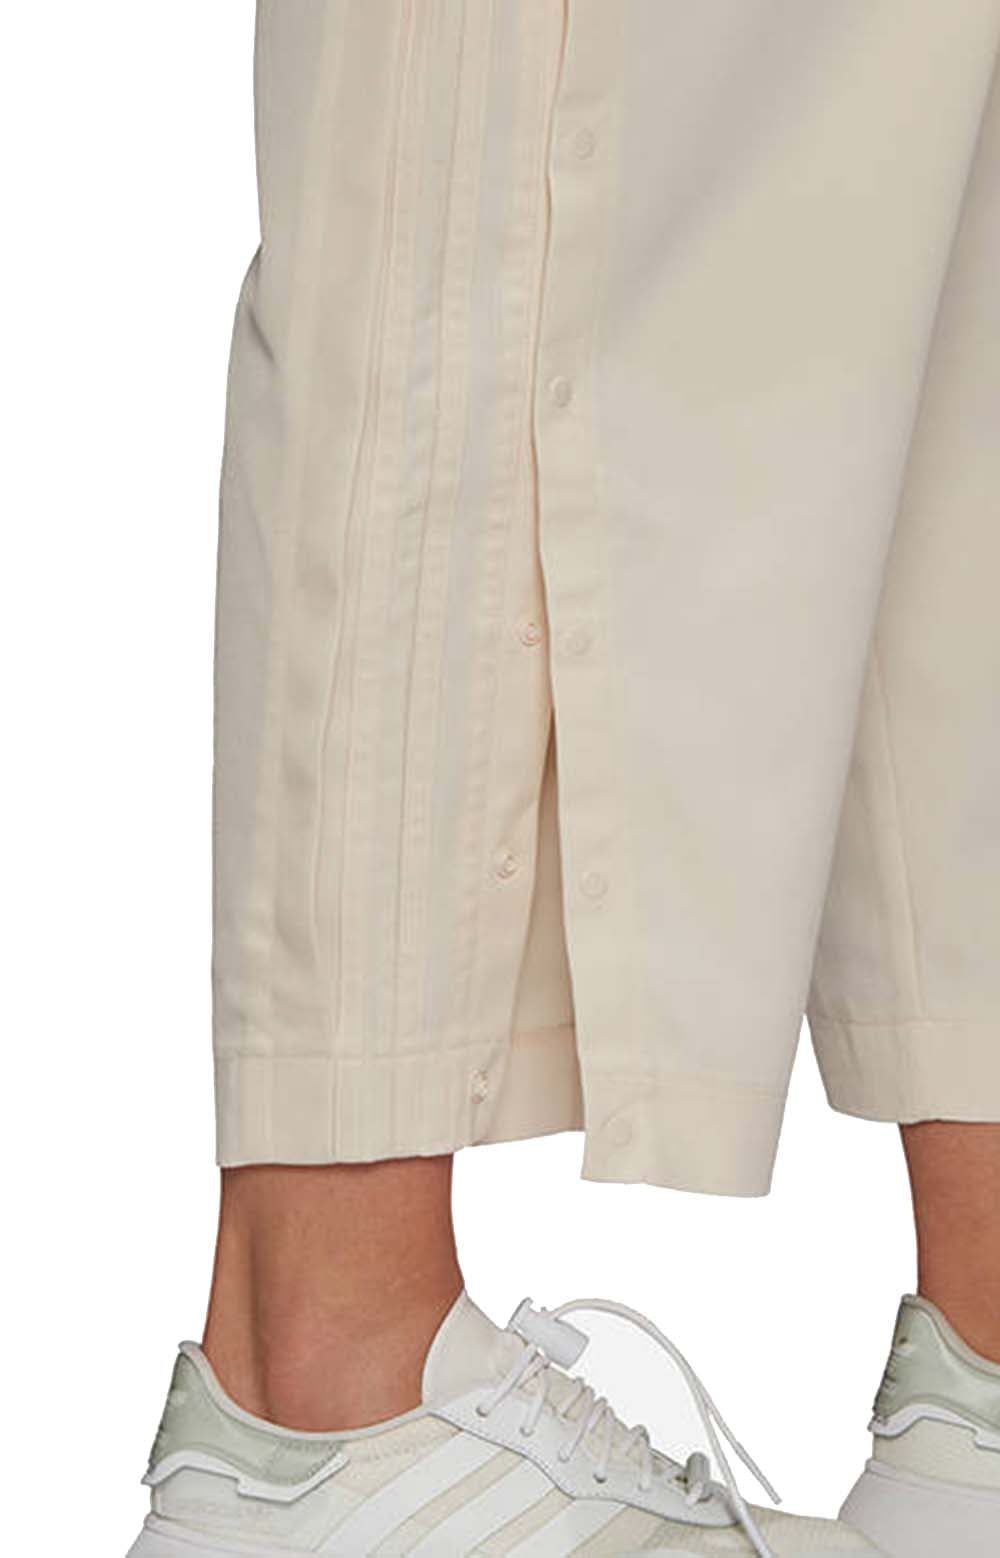 (HF2009) Always Original Relaxed Pants - Wonder White